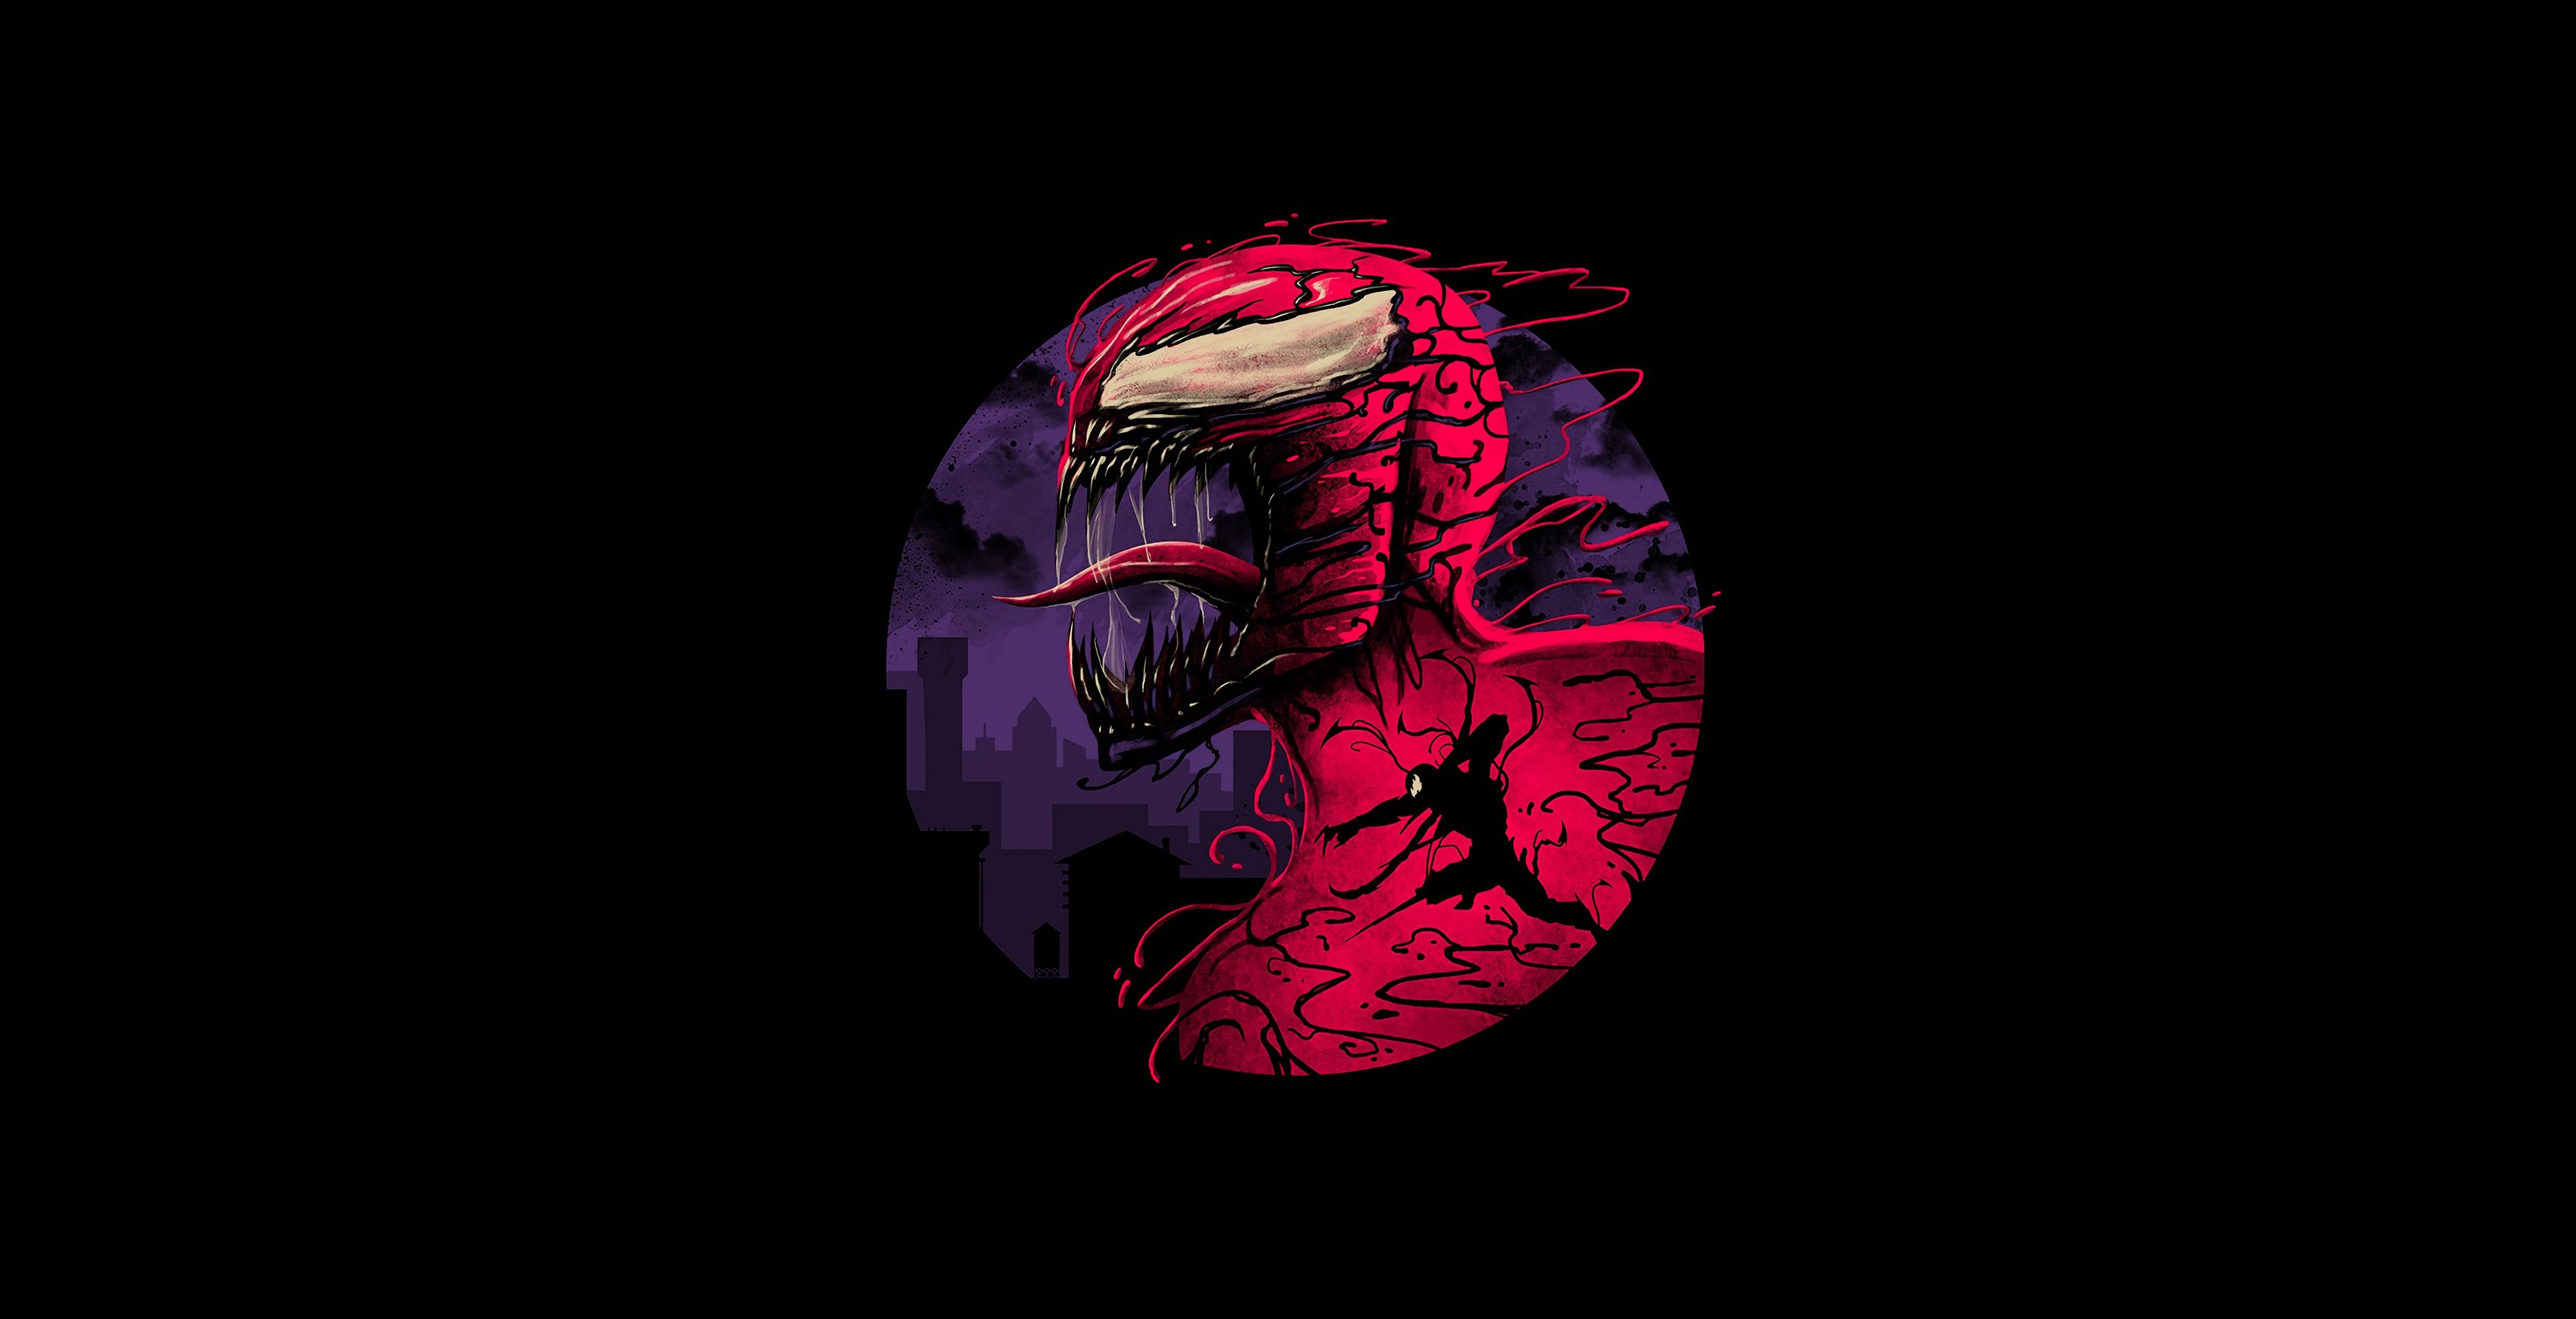 Red Venom Dark 4k, HD Superheroes, 4k Wallpaper, Image, Background, Photo and Picture